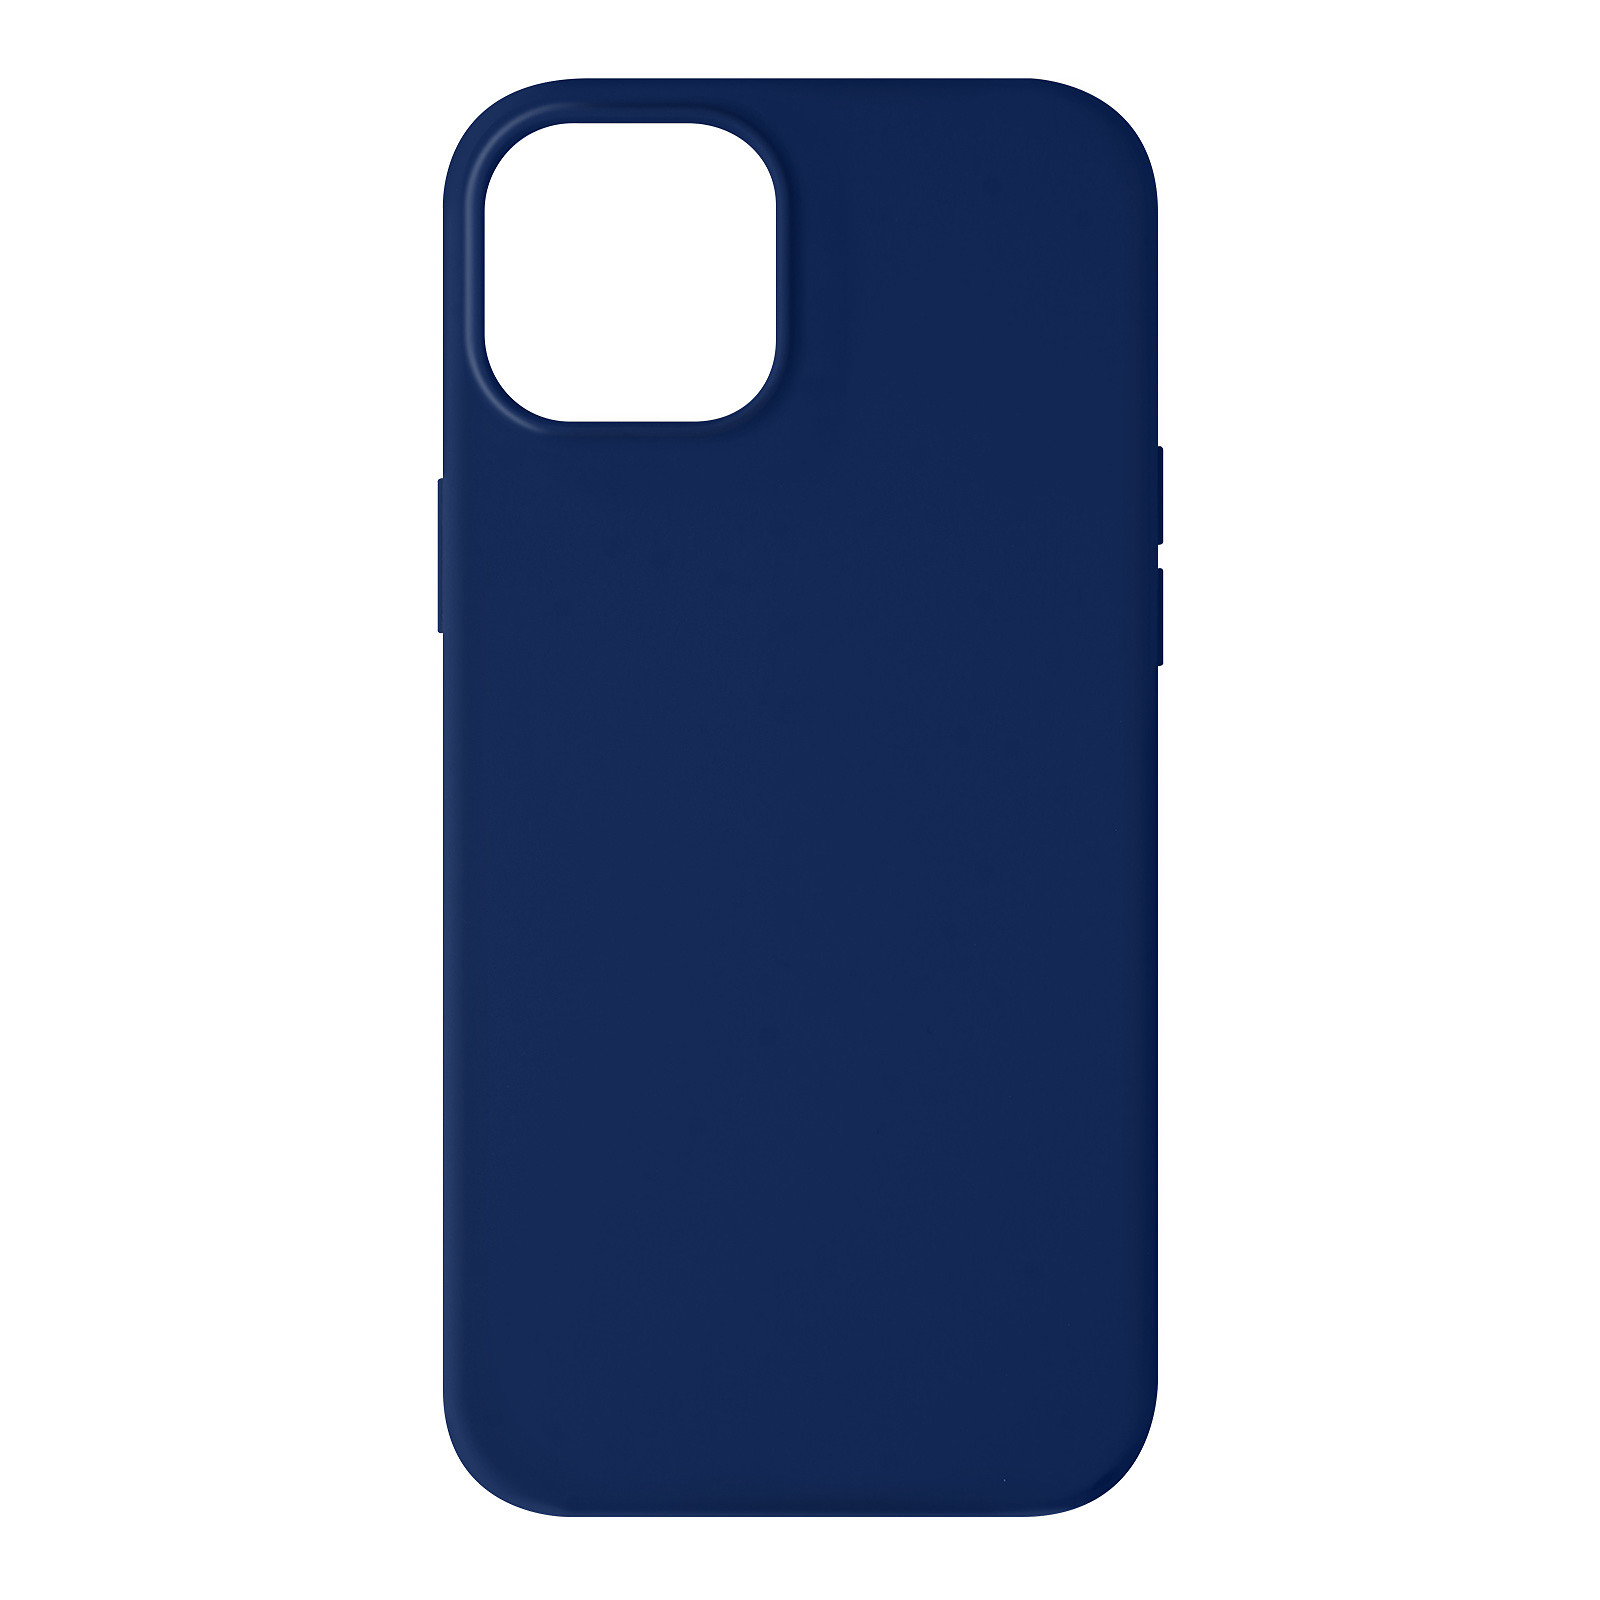 Avizar Coque pour iPhone 13 Silicone Semi-rigide Finition Soft-touch Bleu roi - Coque telephone Avizar